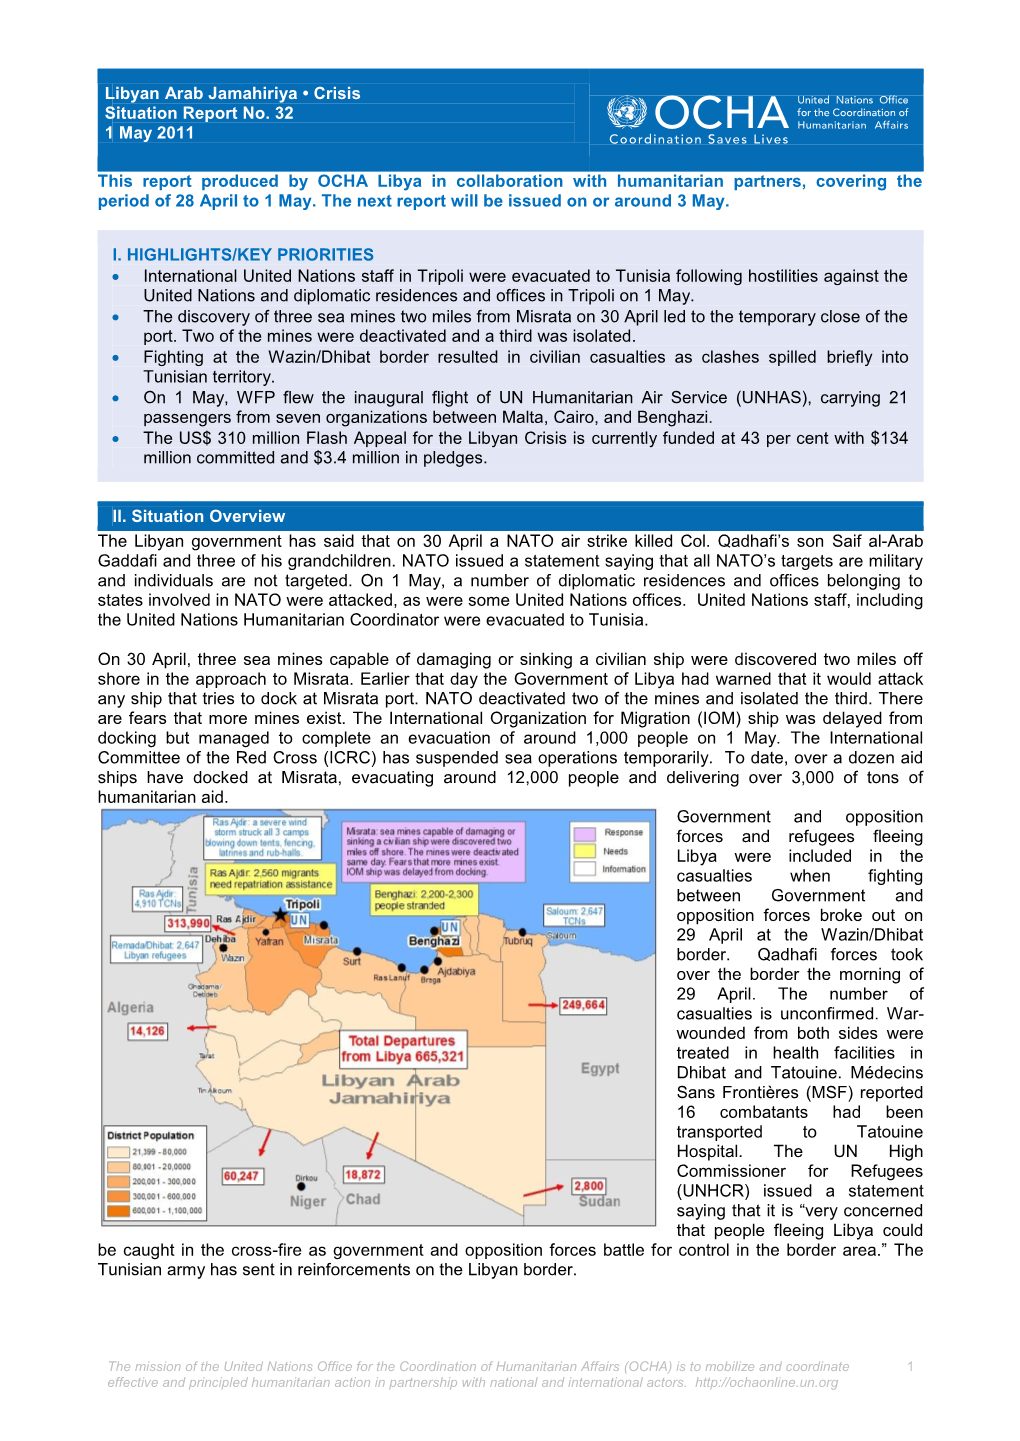 Libyan Arab Jamahiriya • Crisis Situation Report No. 32 1 May 2011